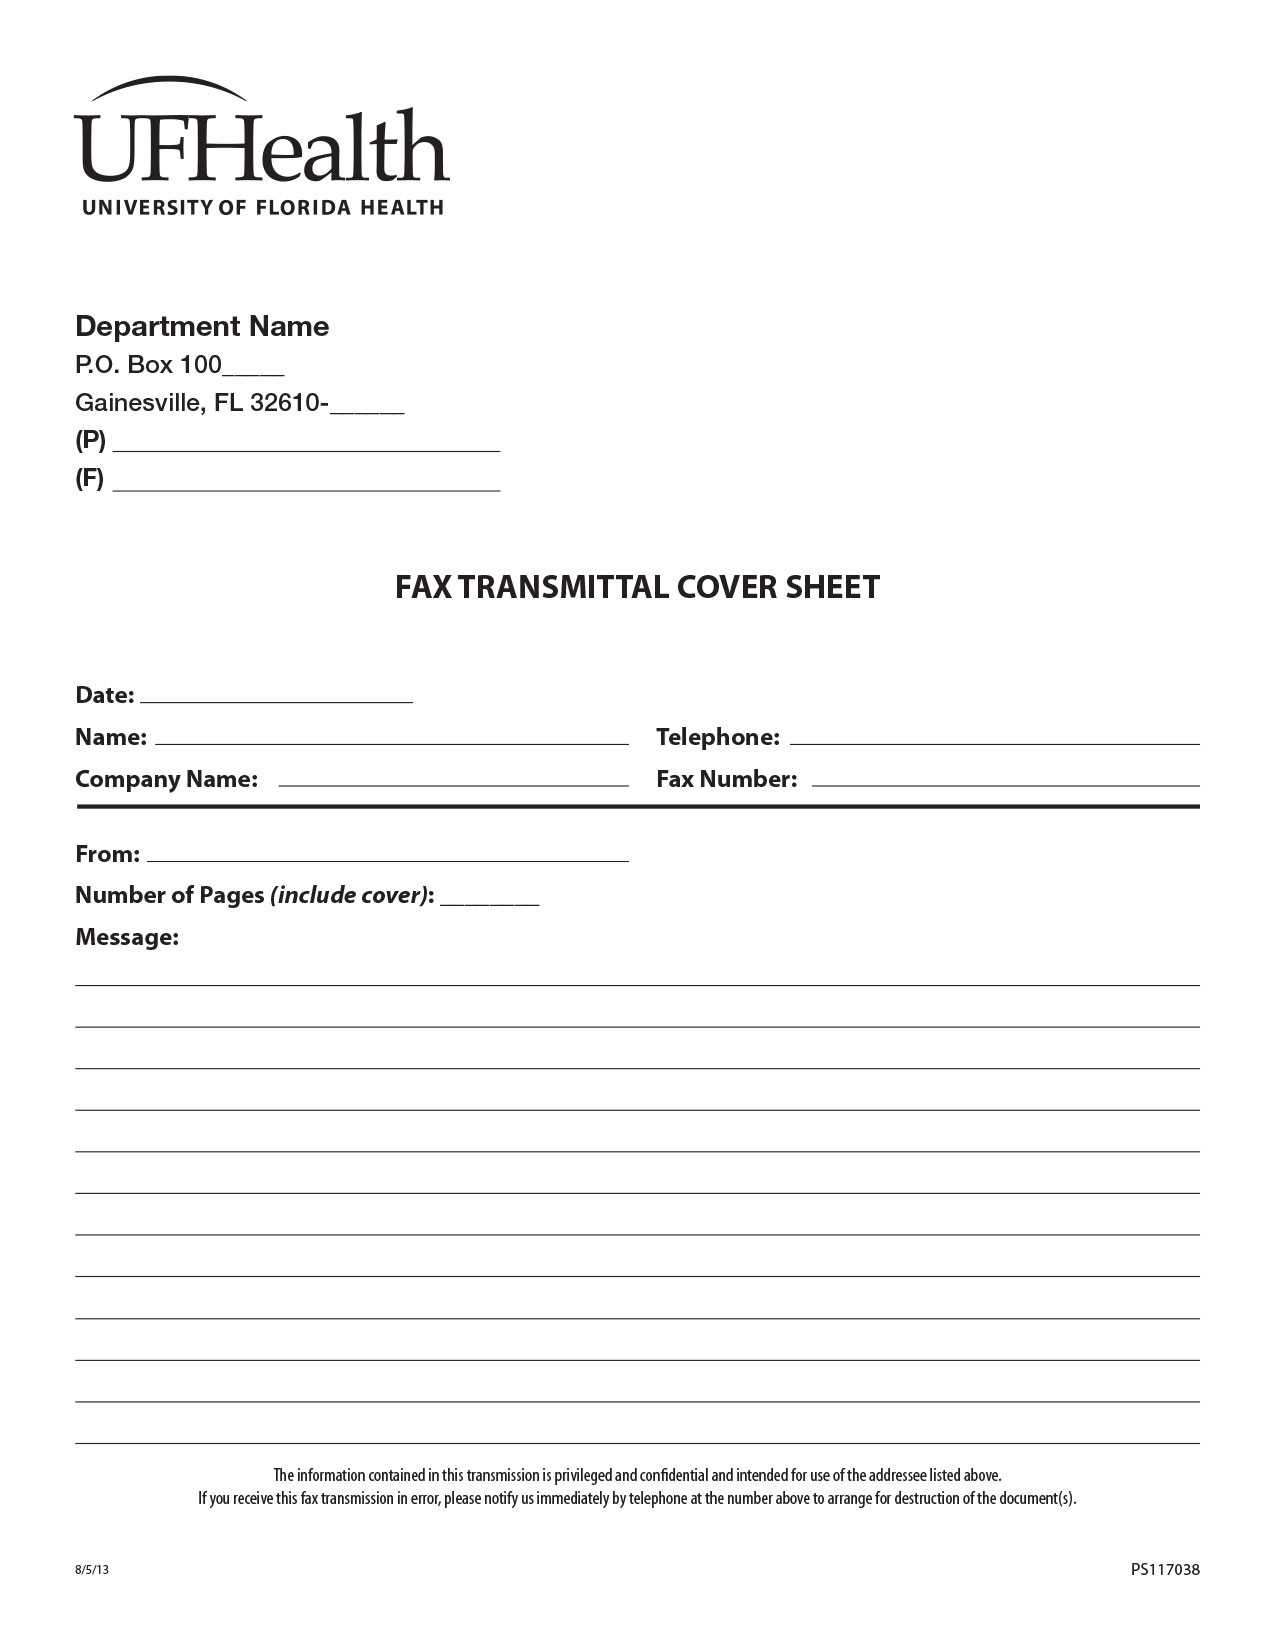 10 Printable Fax Cover Sheet Templates | Proposal Sample Throughout Fax Cover Sheet Template Word 2010